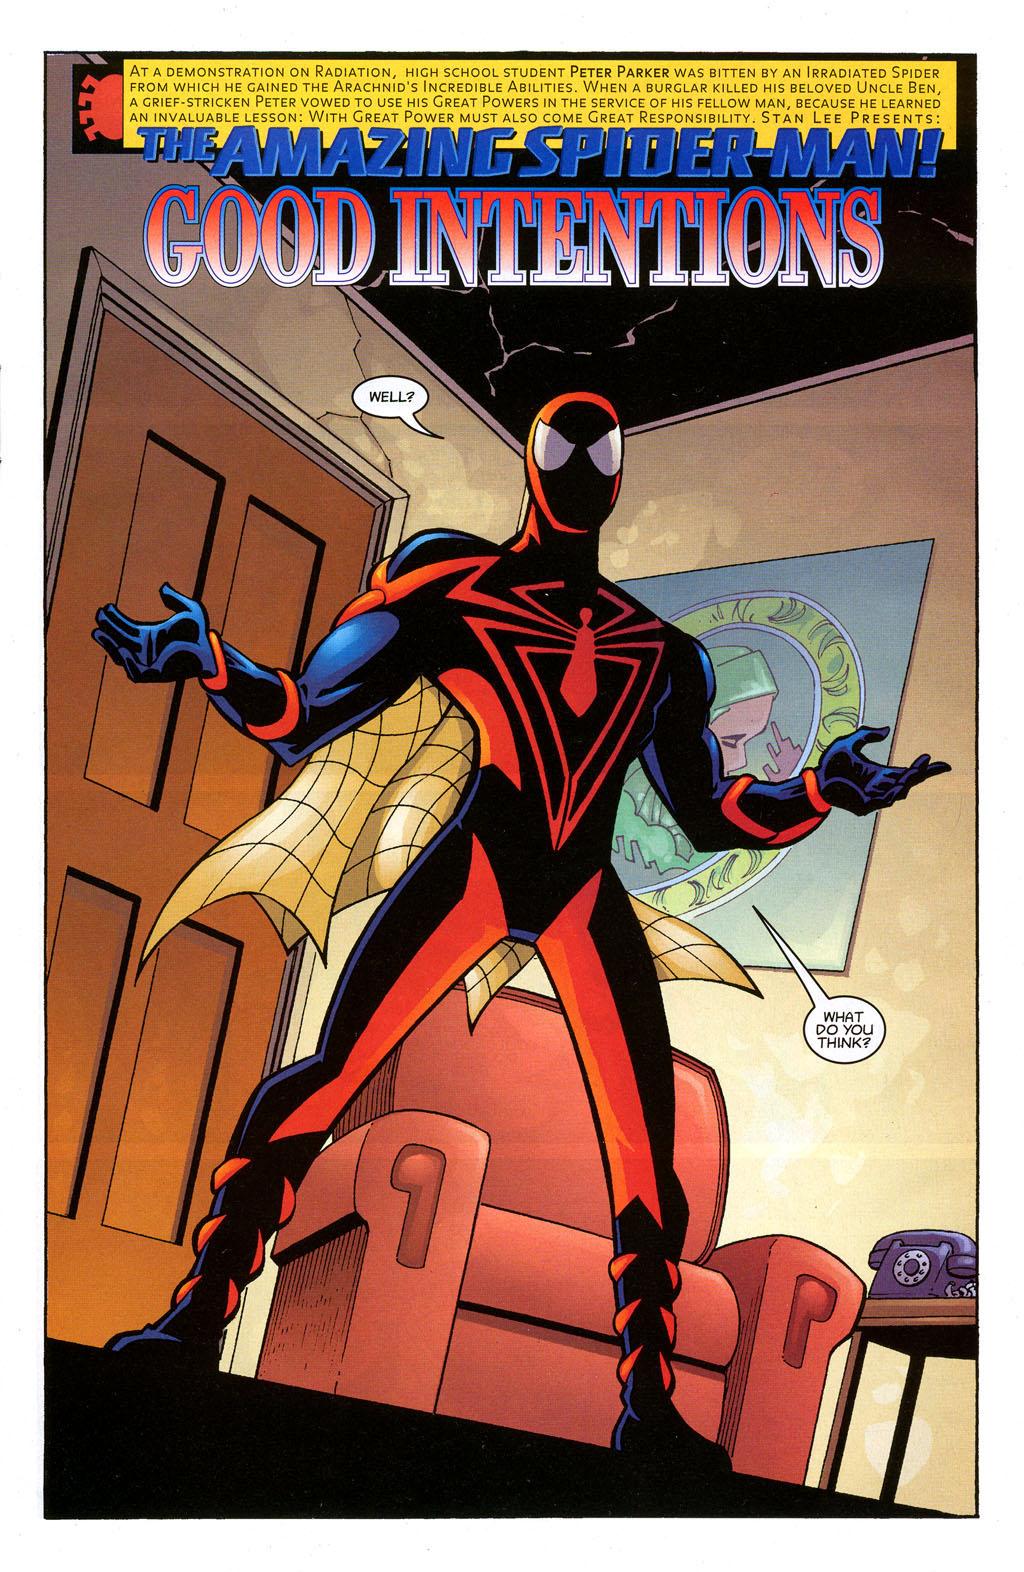 The World's Finest - Spider-Man Unlimited.